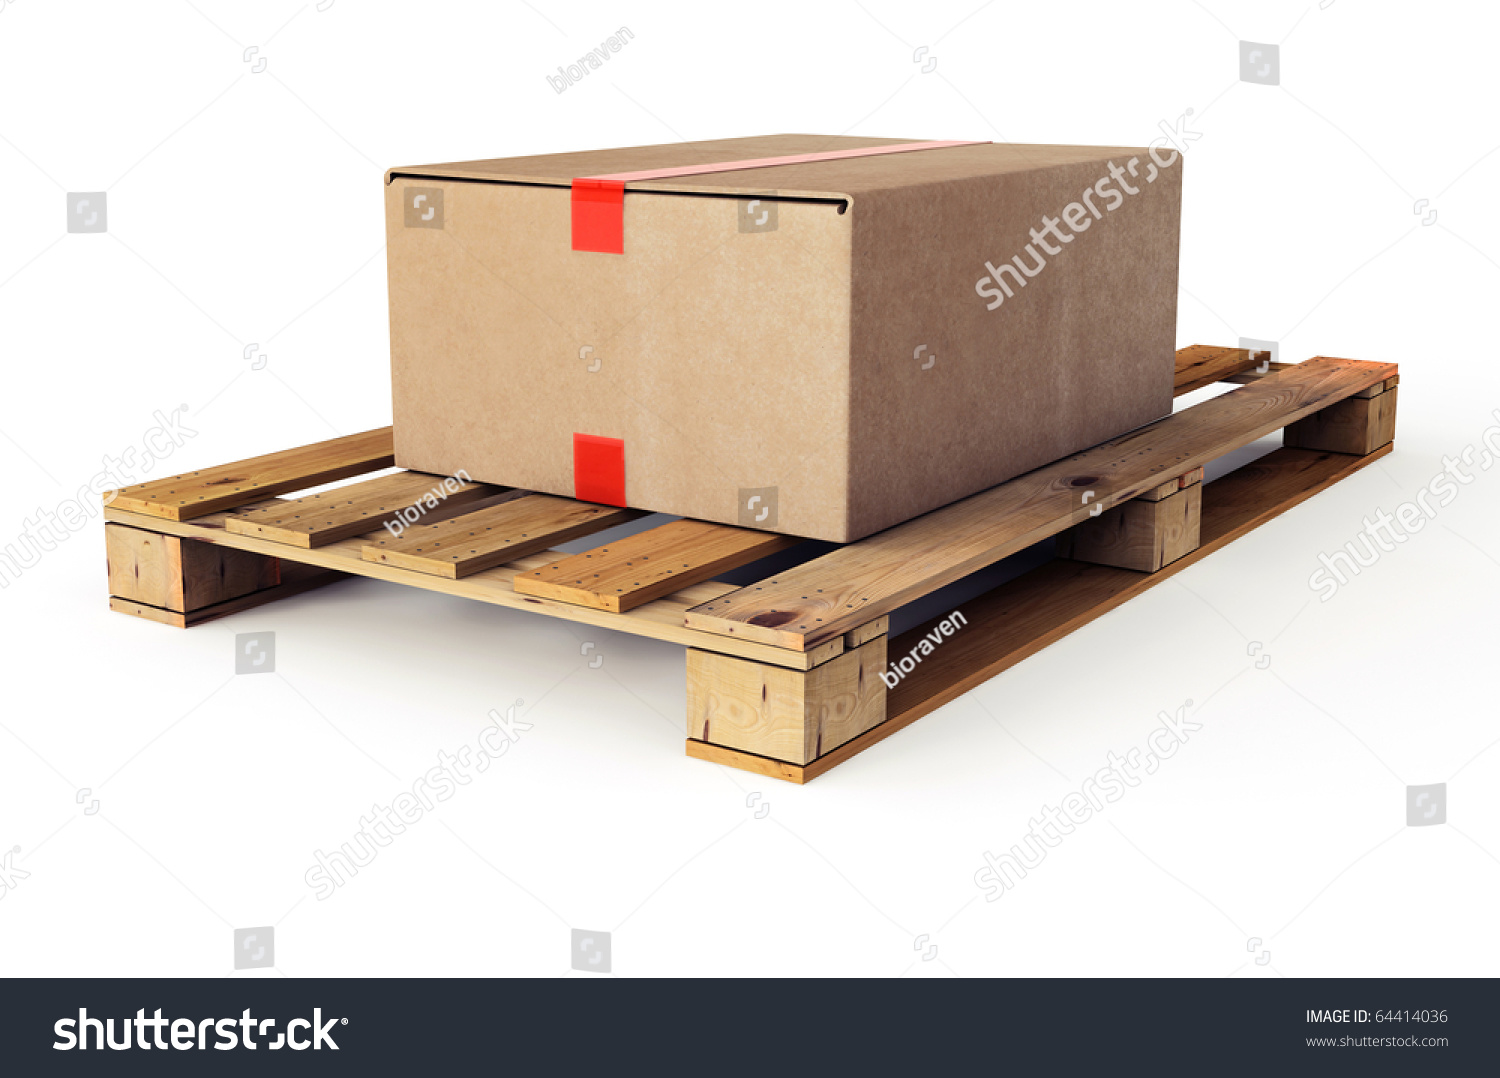 Wooden Shipping Pallet Stock Photo 64414036 : Shutterstock